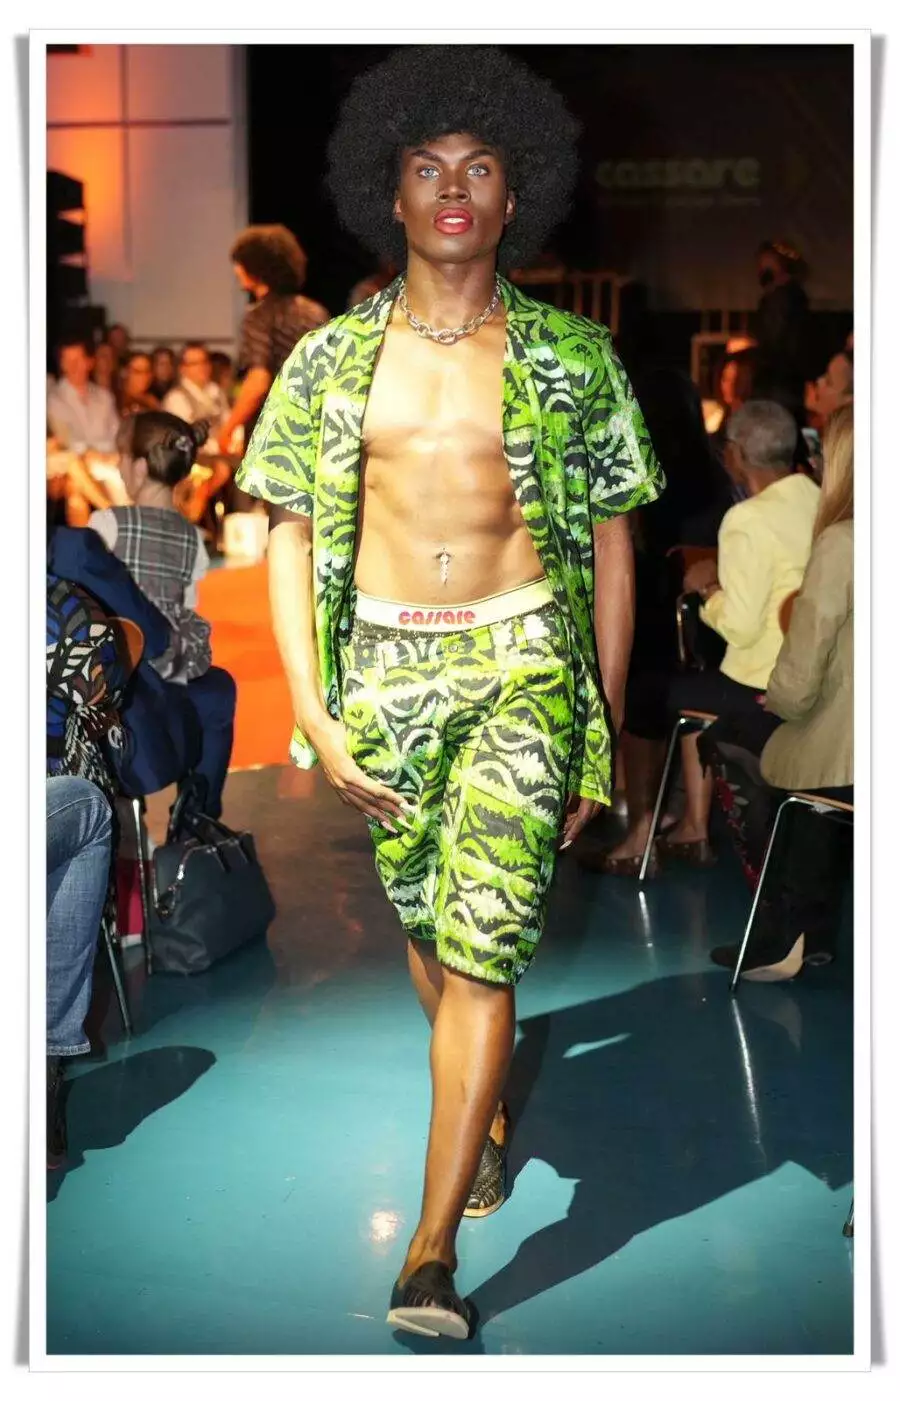 Ijebu Ode – Shirt&short Men's Fashion Cassare